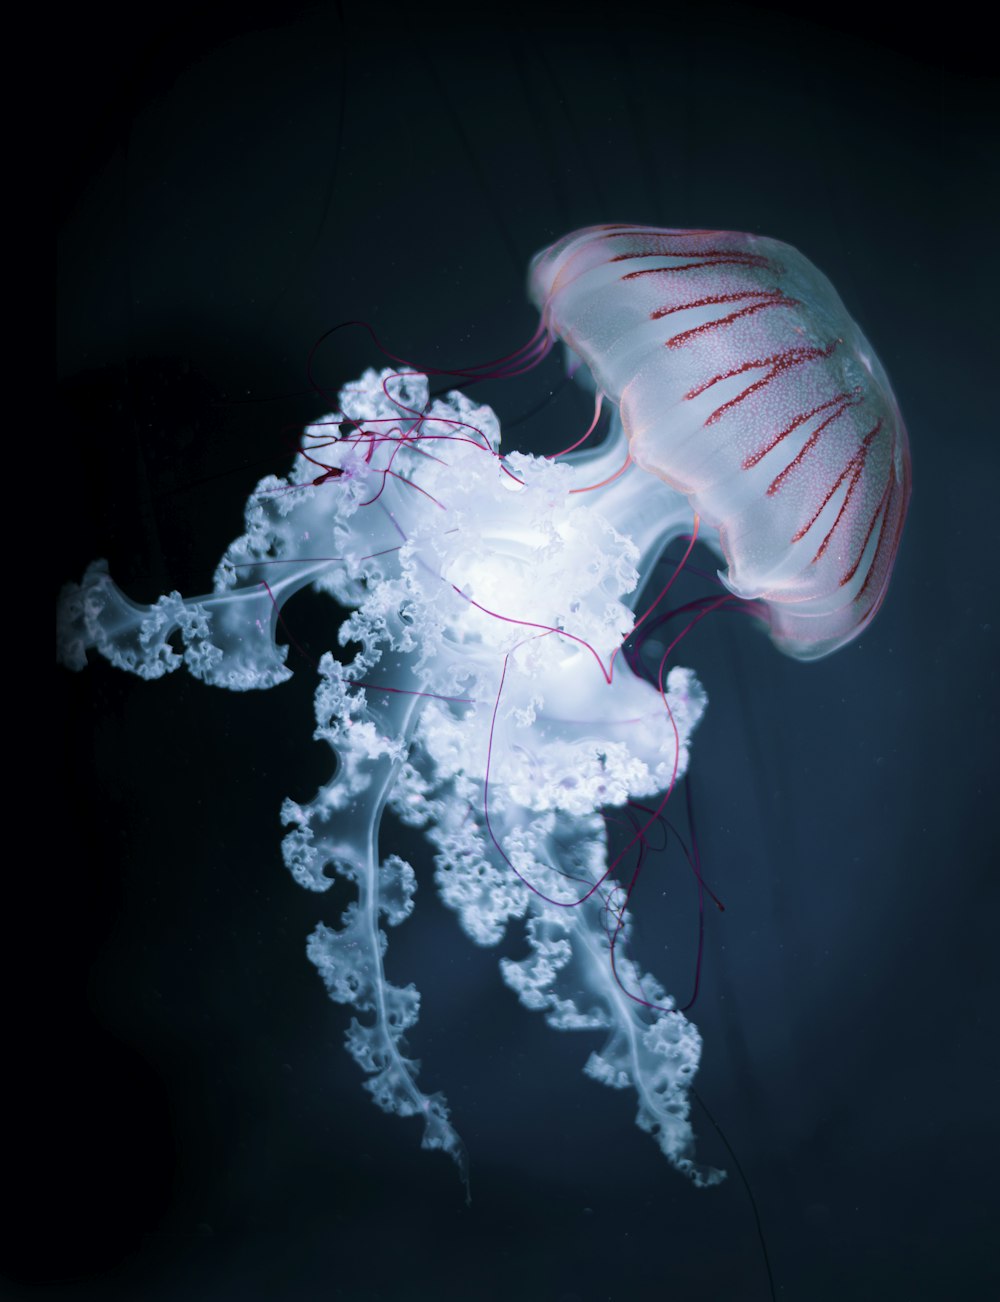 medusas blancas y rosadas